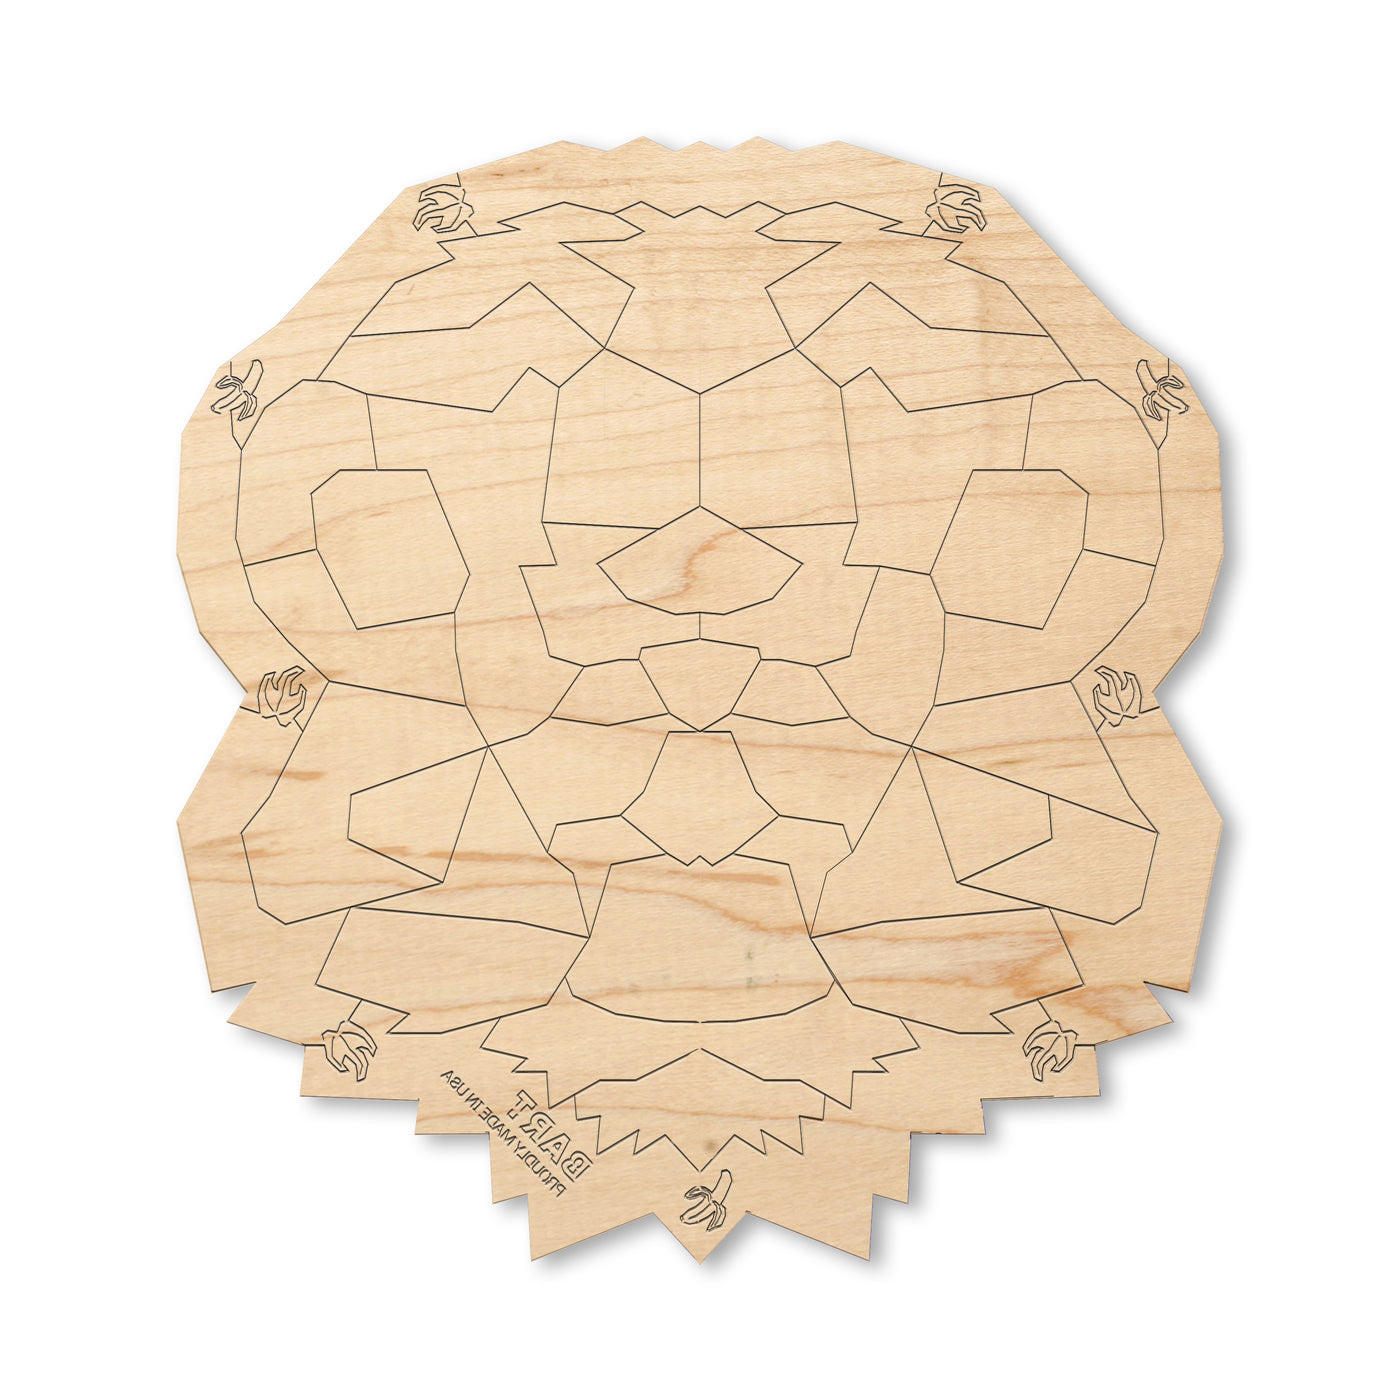 Wooden jigsaw puzzle Artful monkey